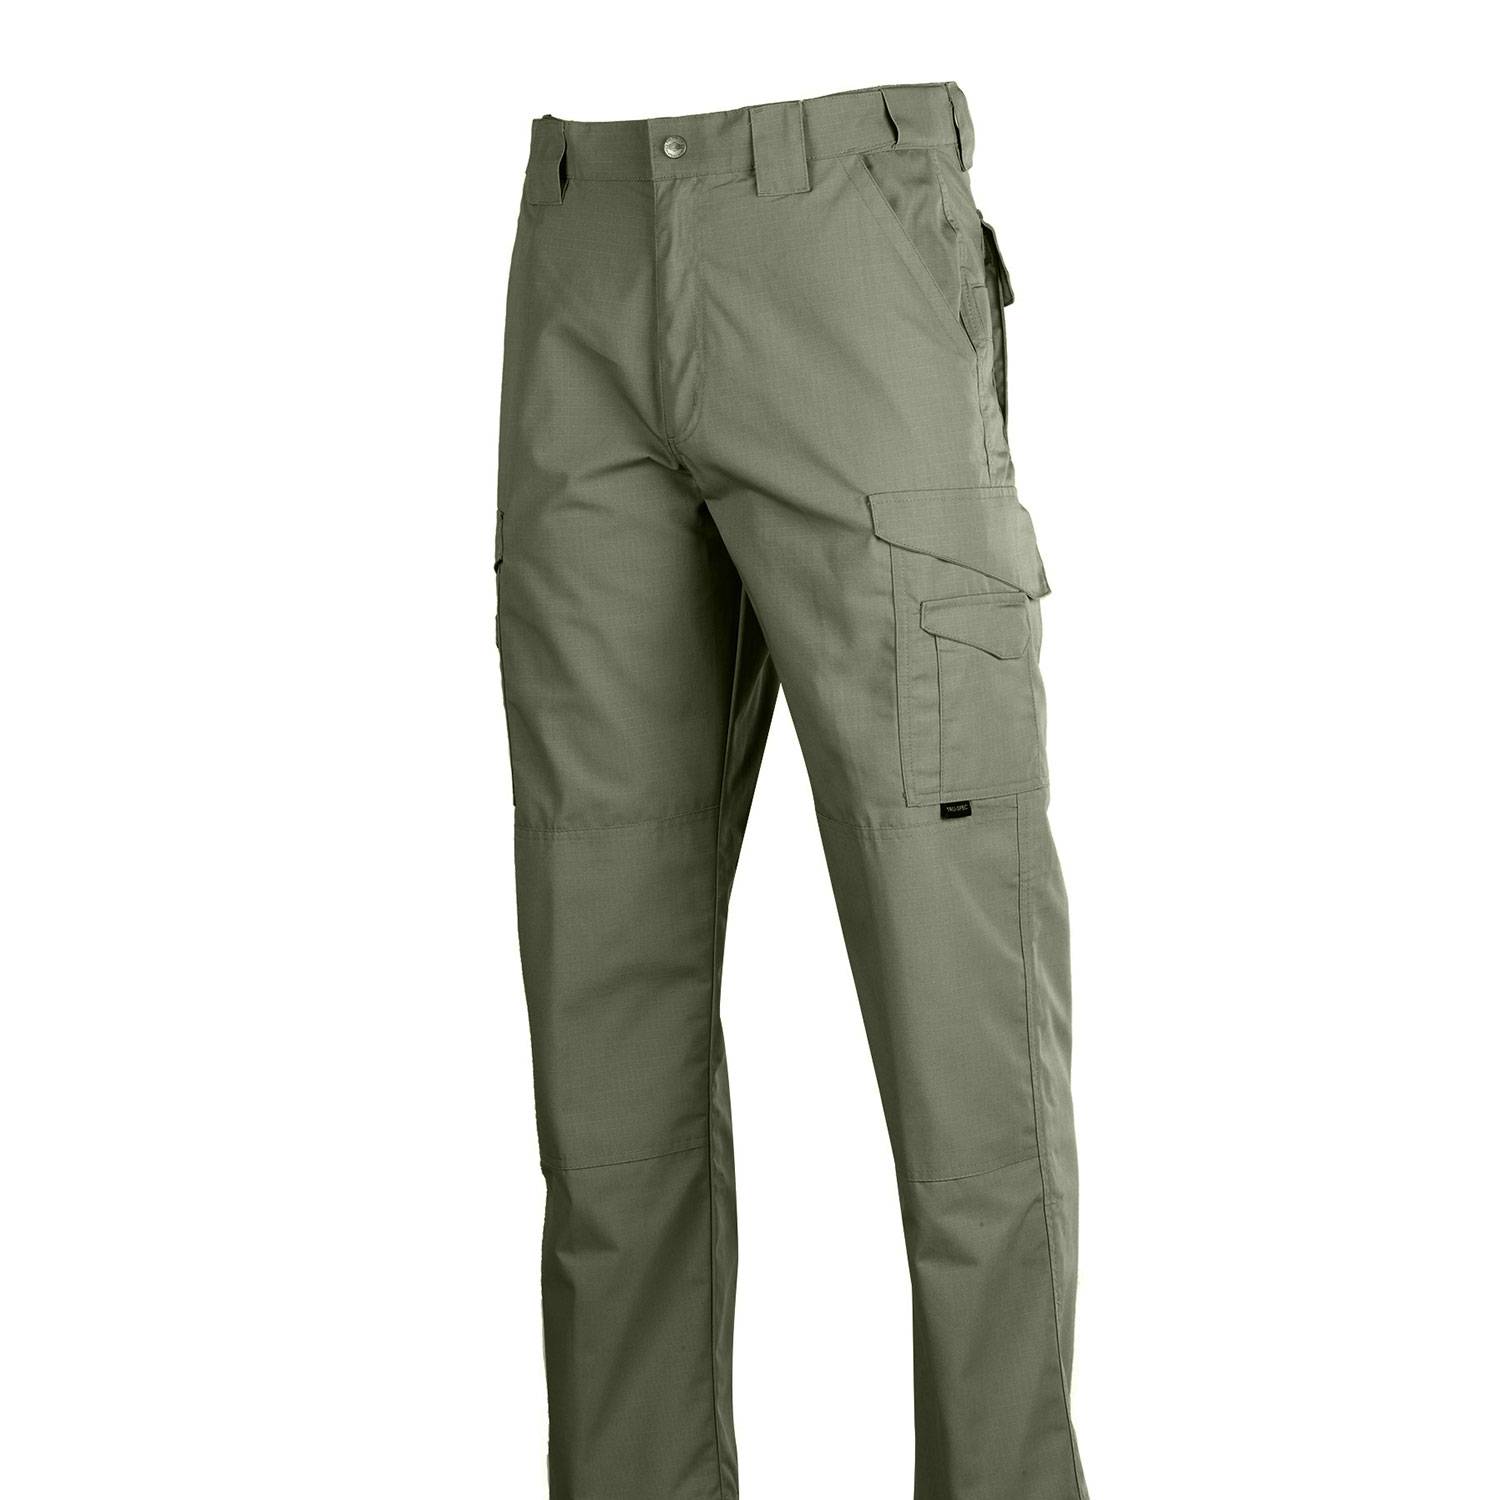 TRU-SPEC 24-7 Series Guardian Pants